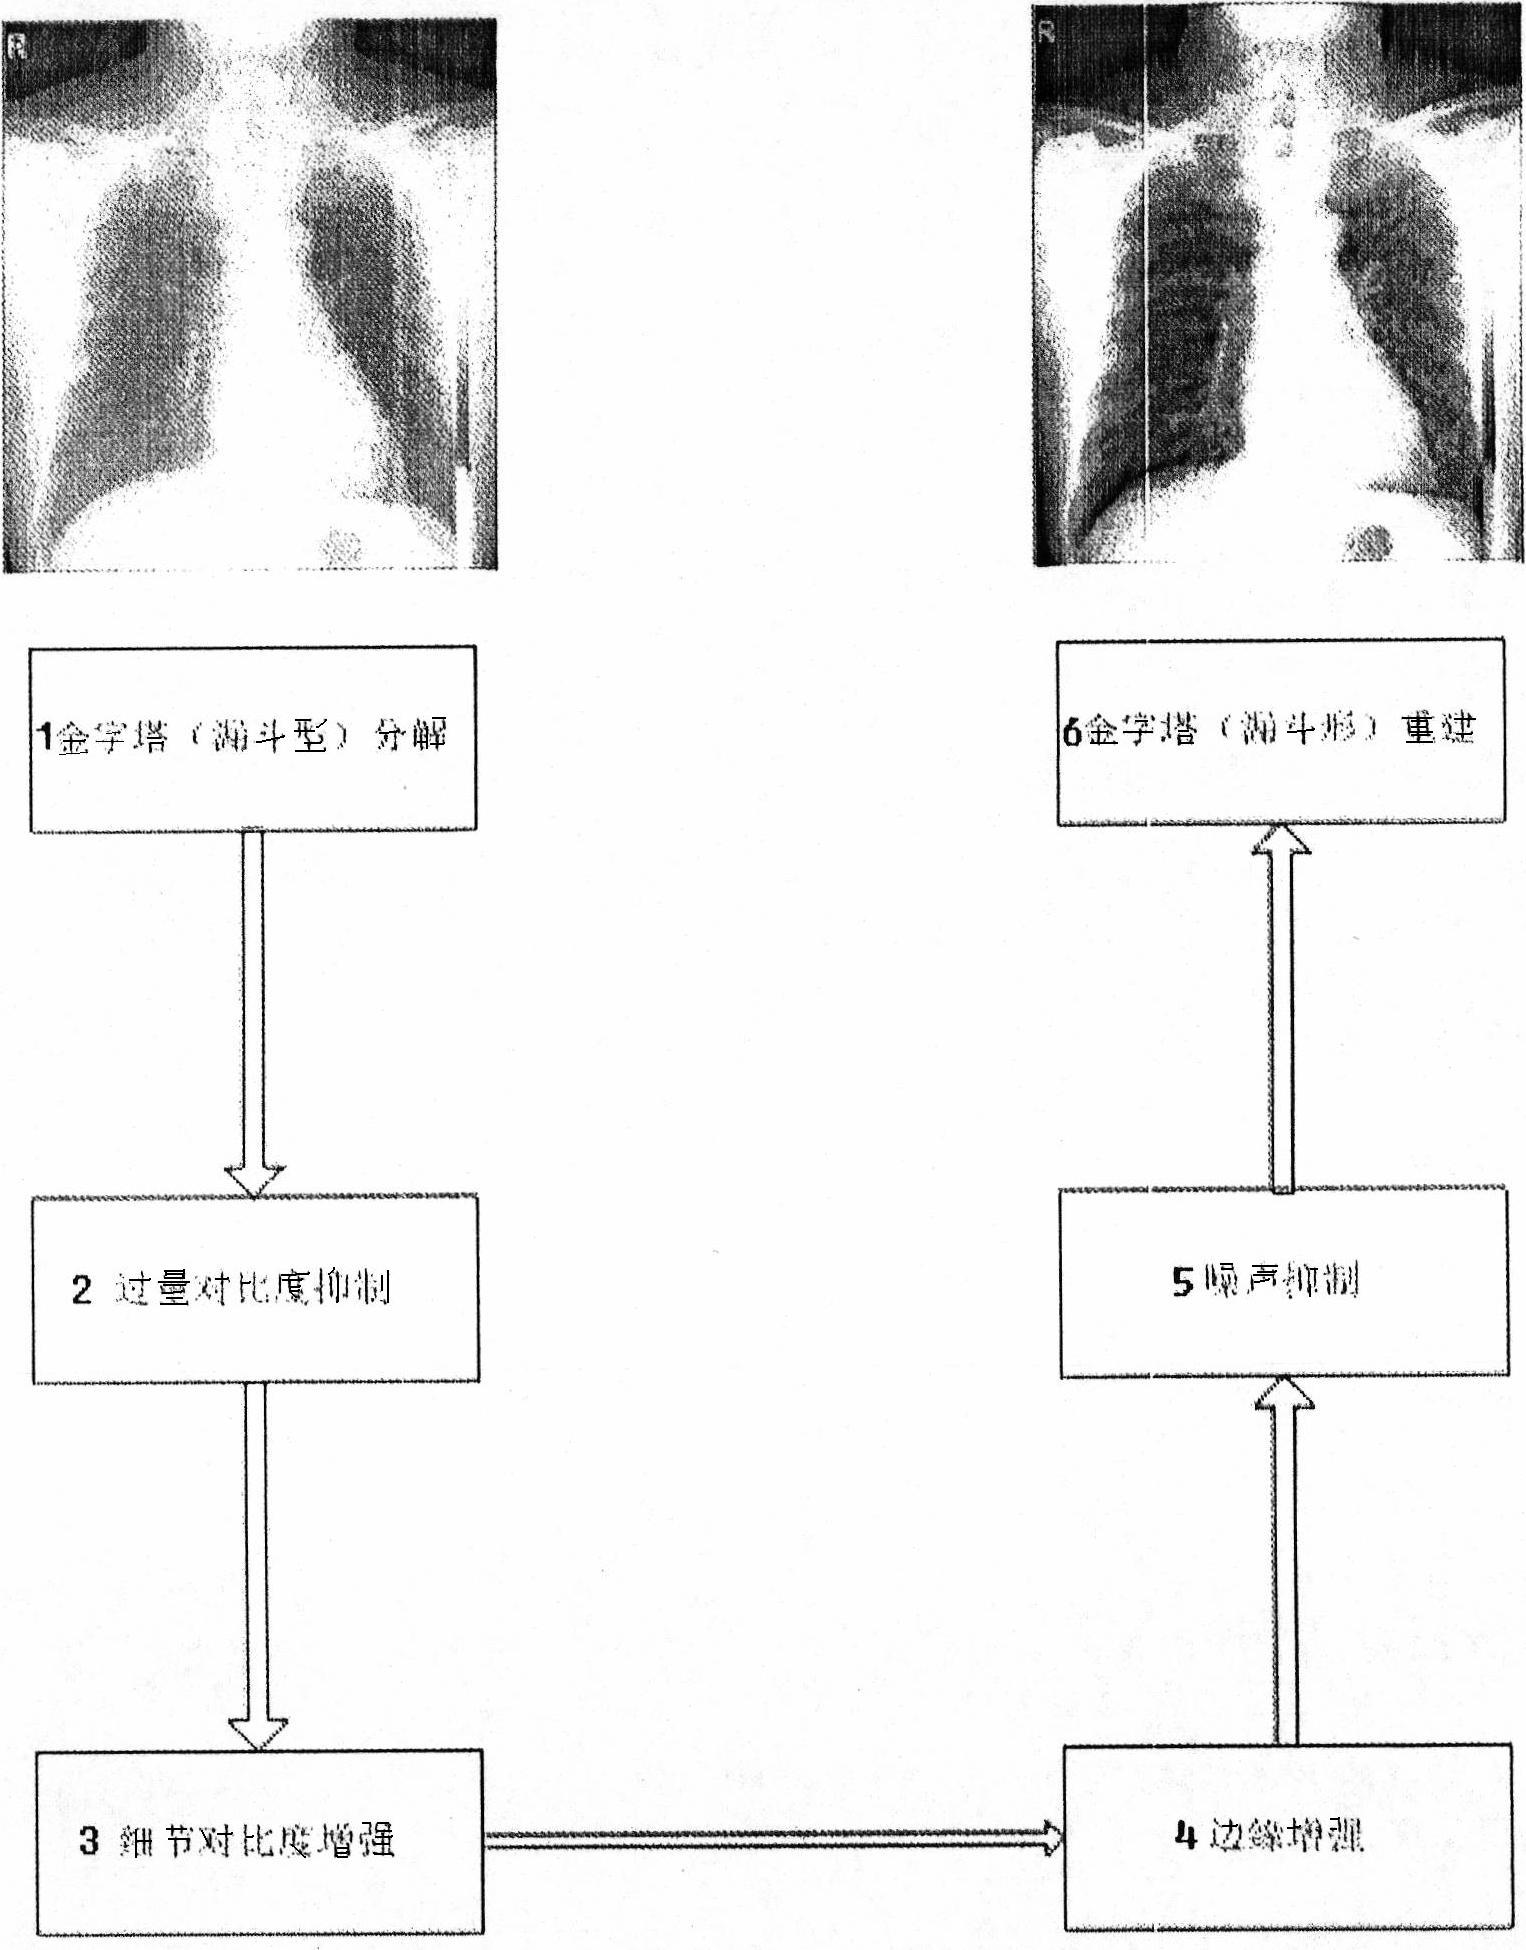 Method for enhancing medical X-ray image display effect